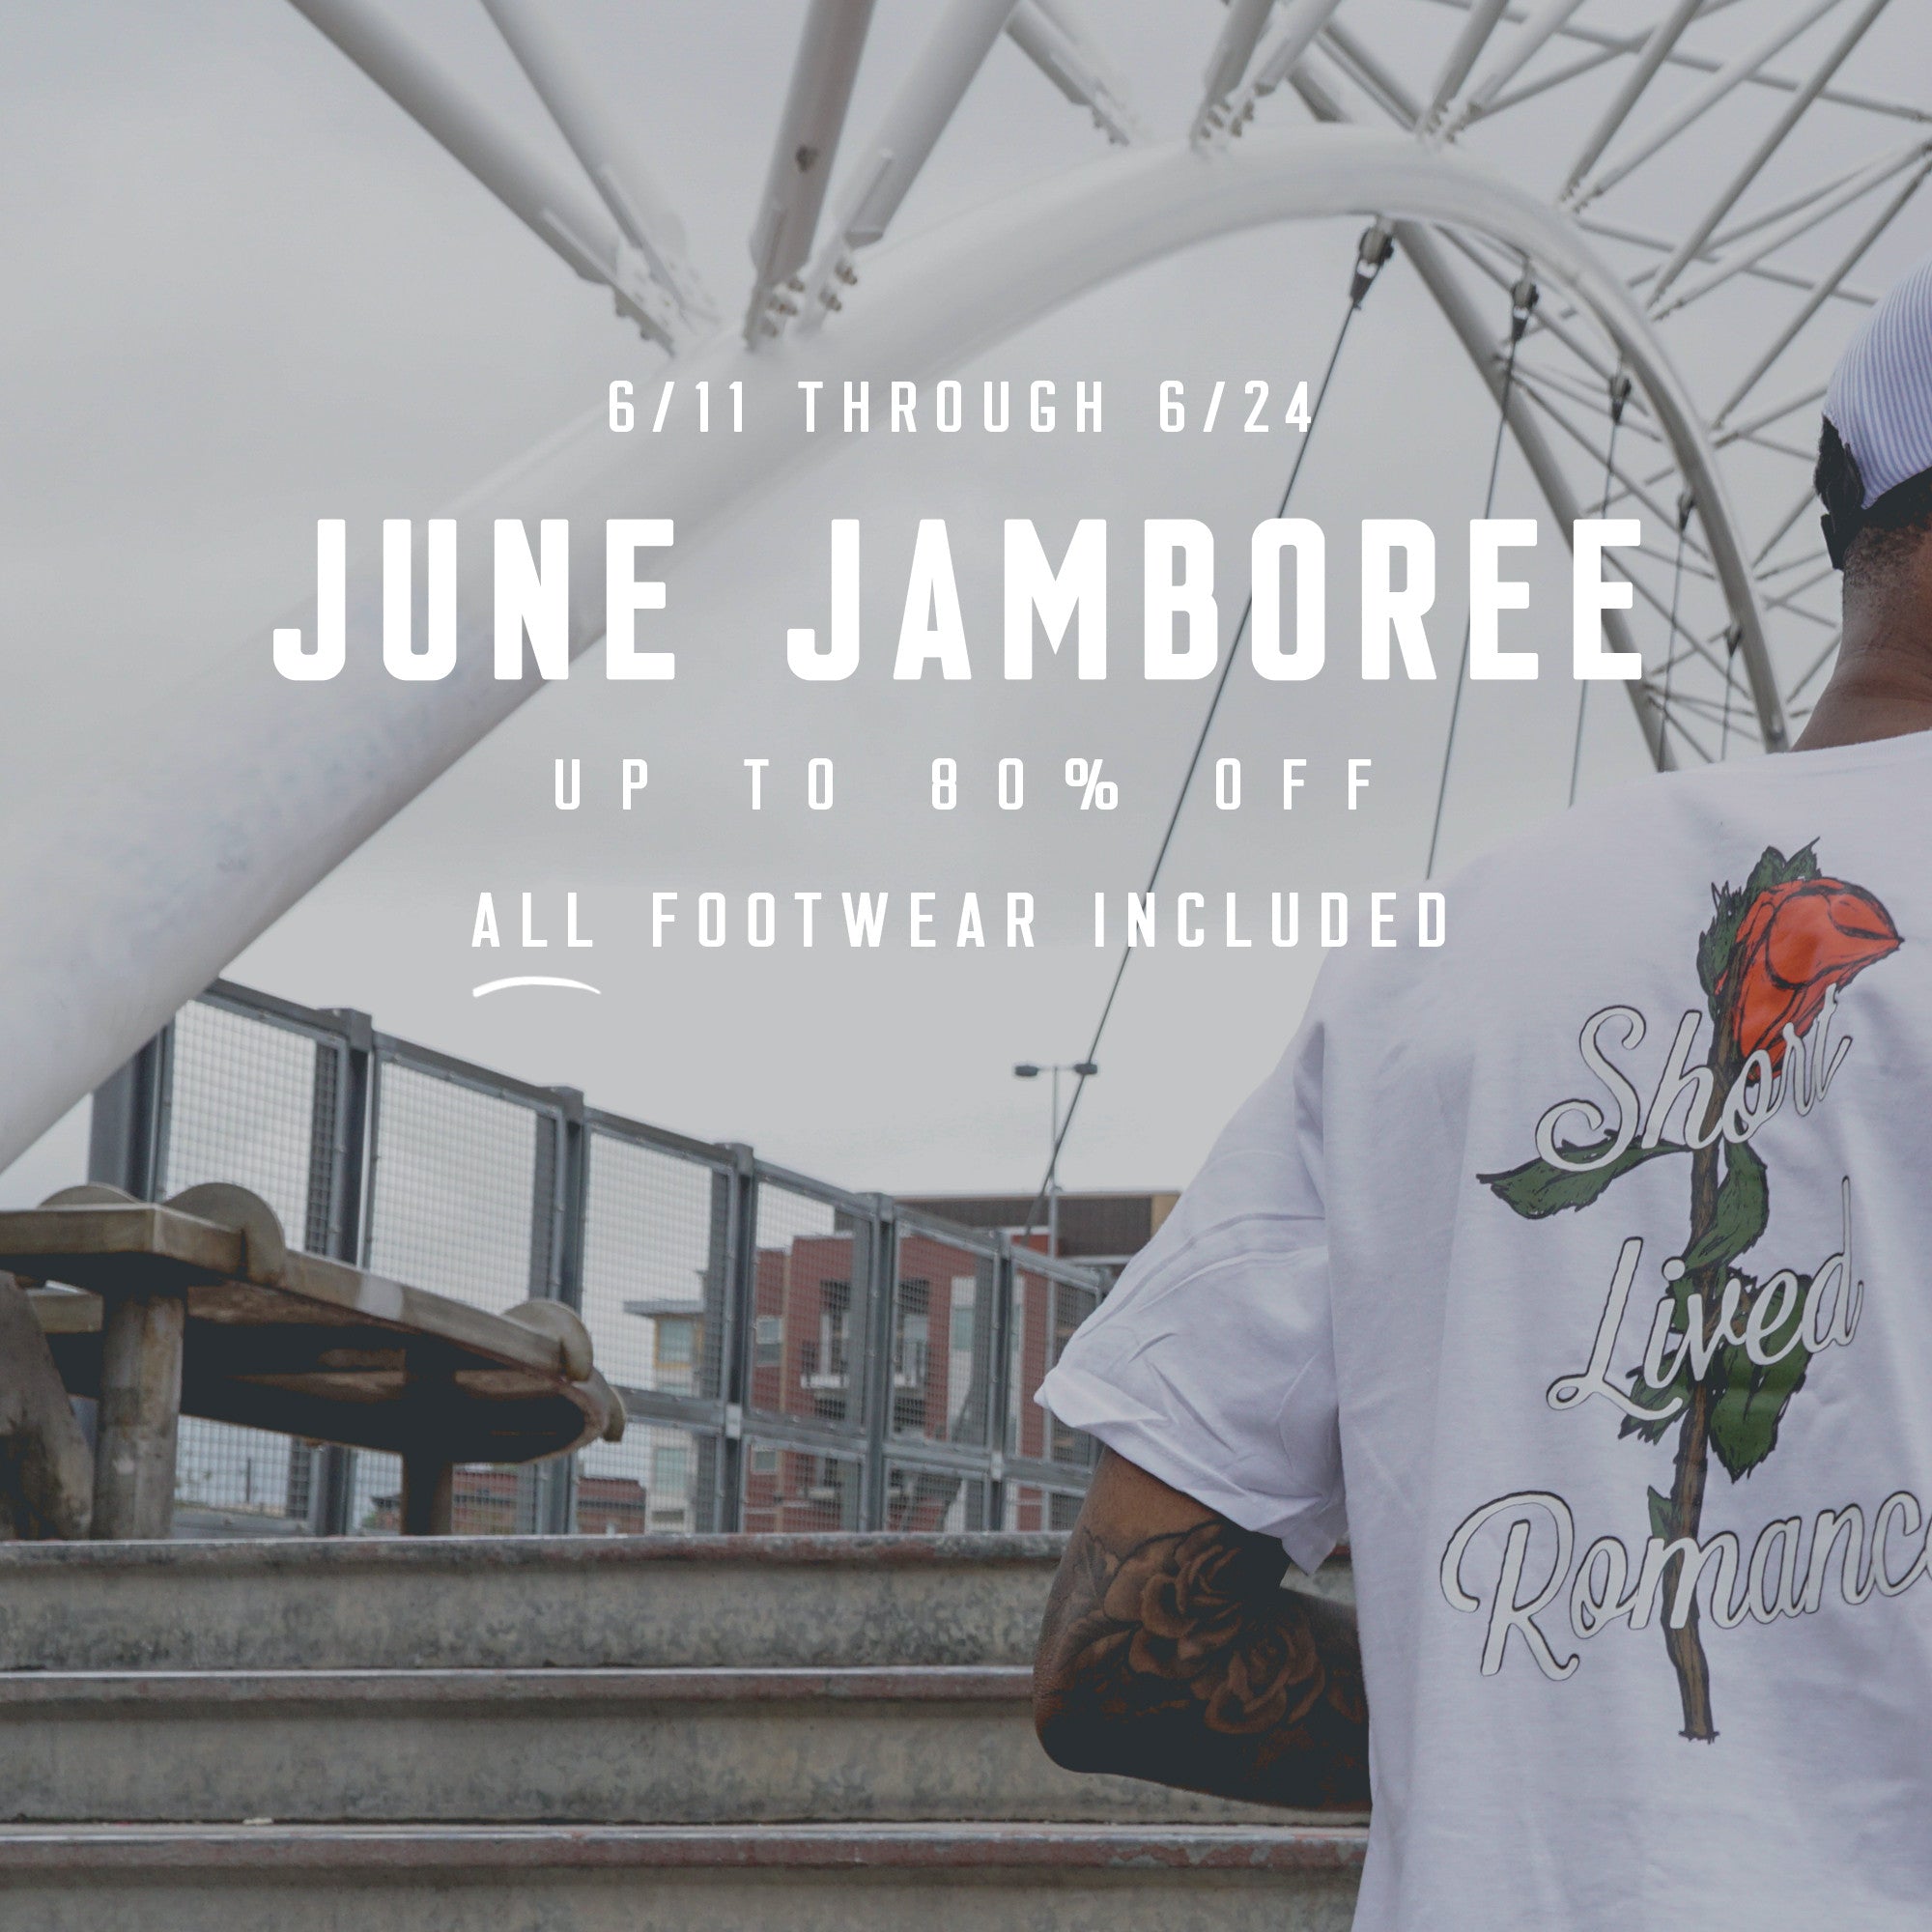 June Jamboree 2016 - Up to 80% Off